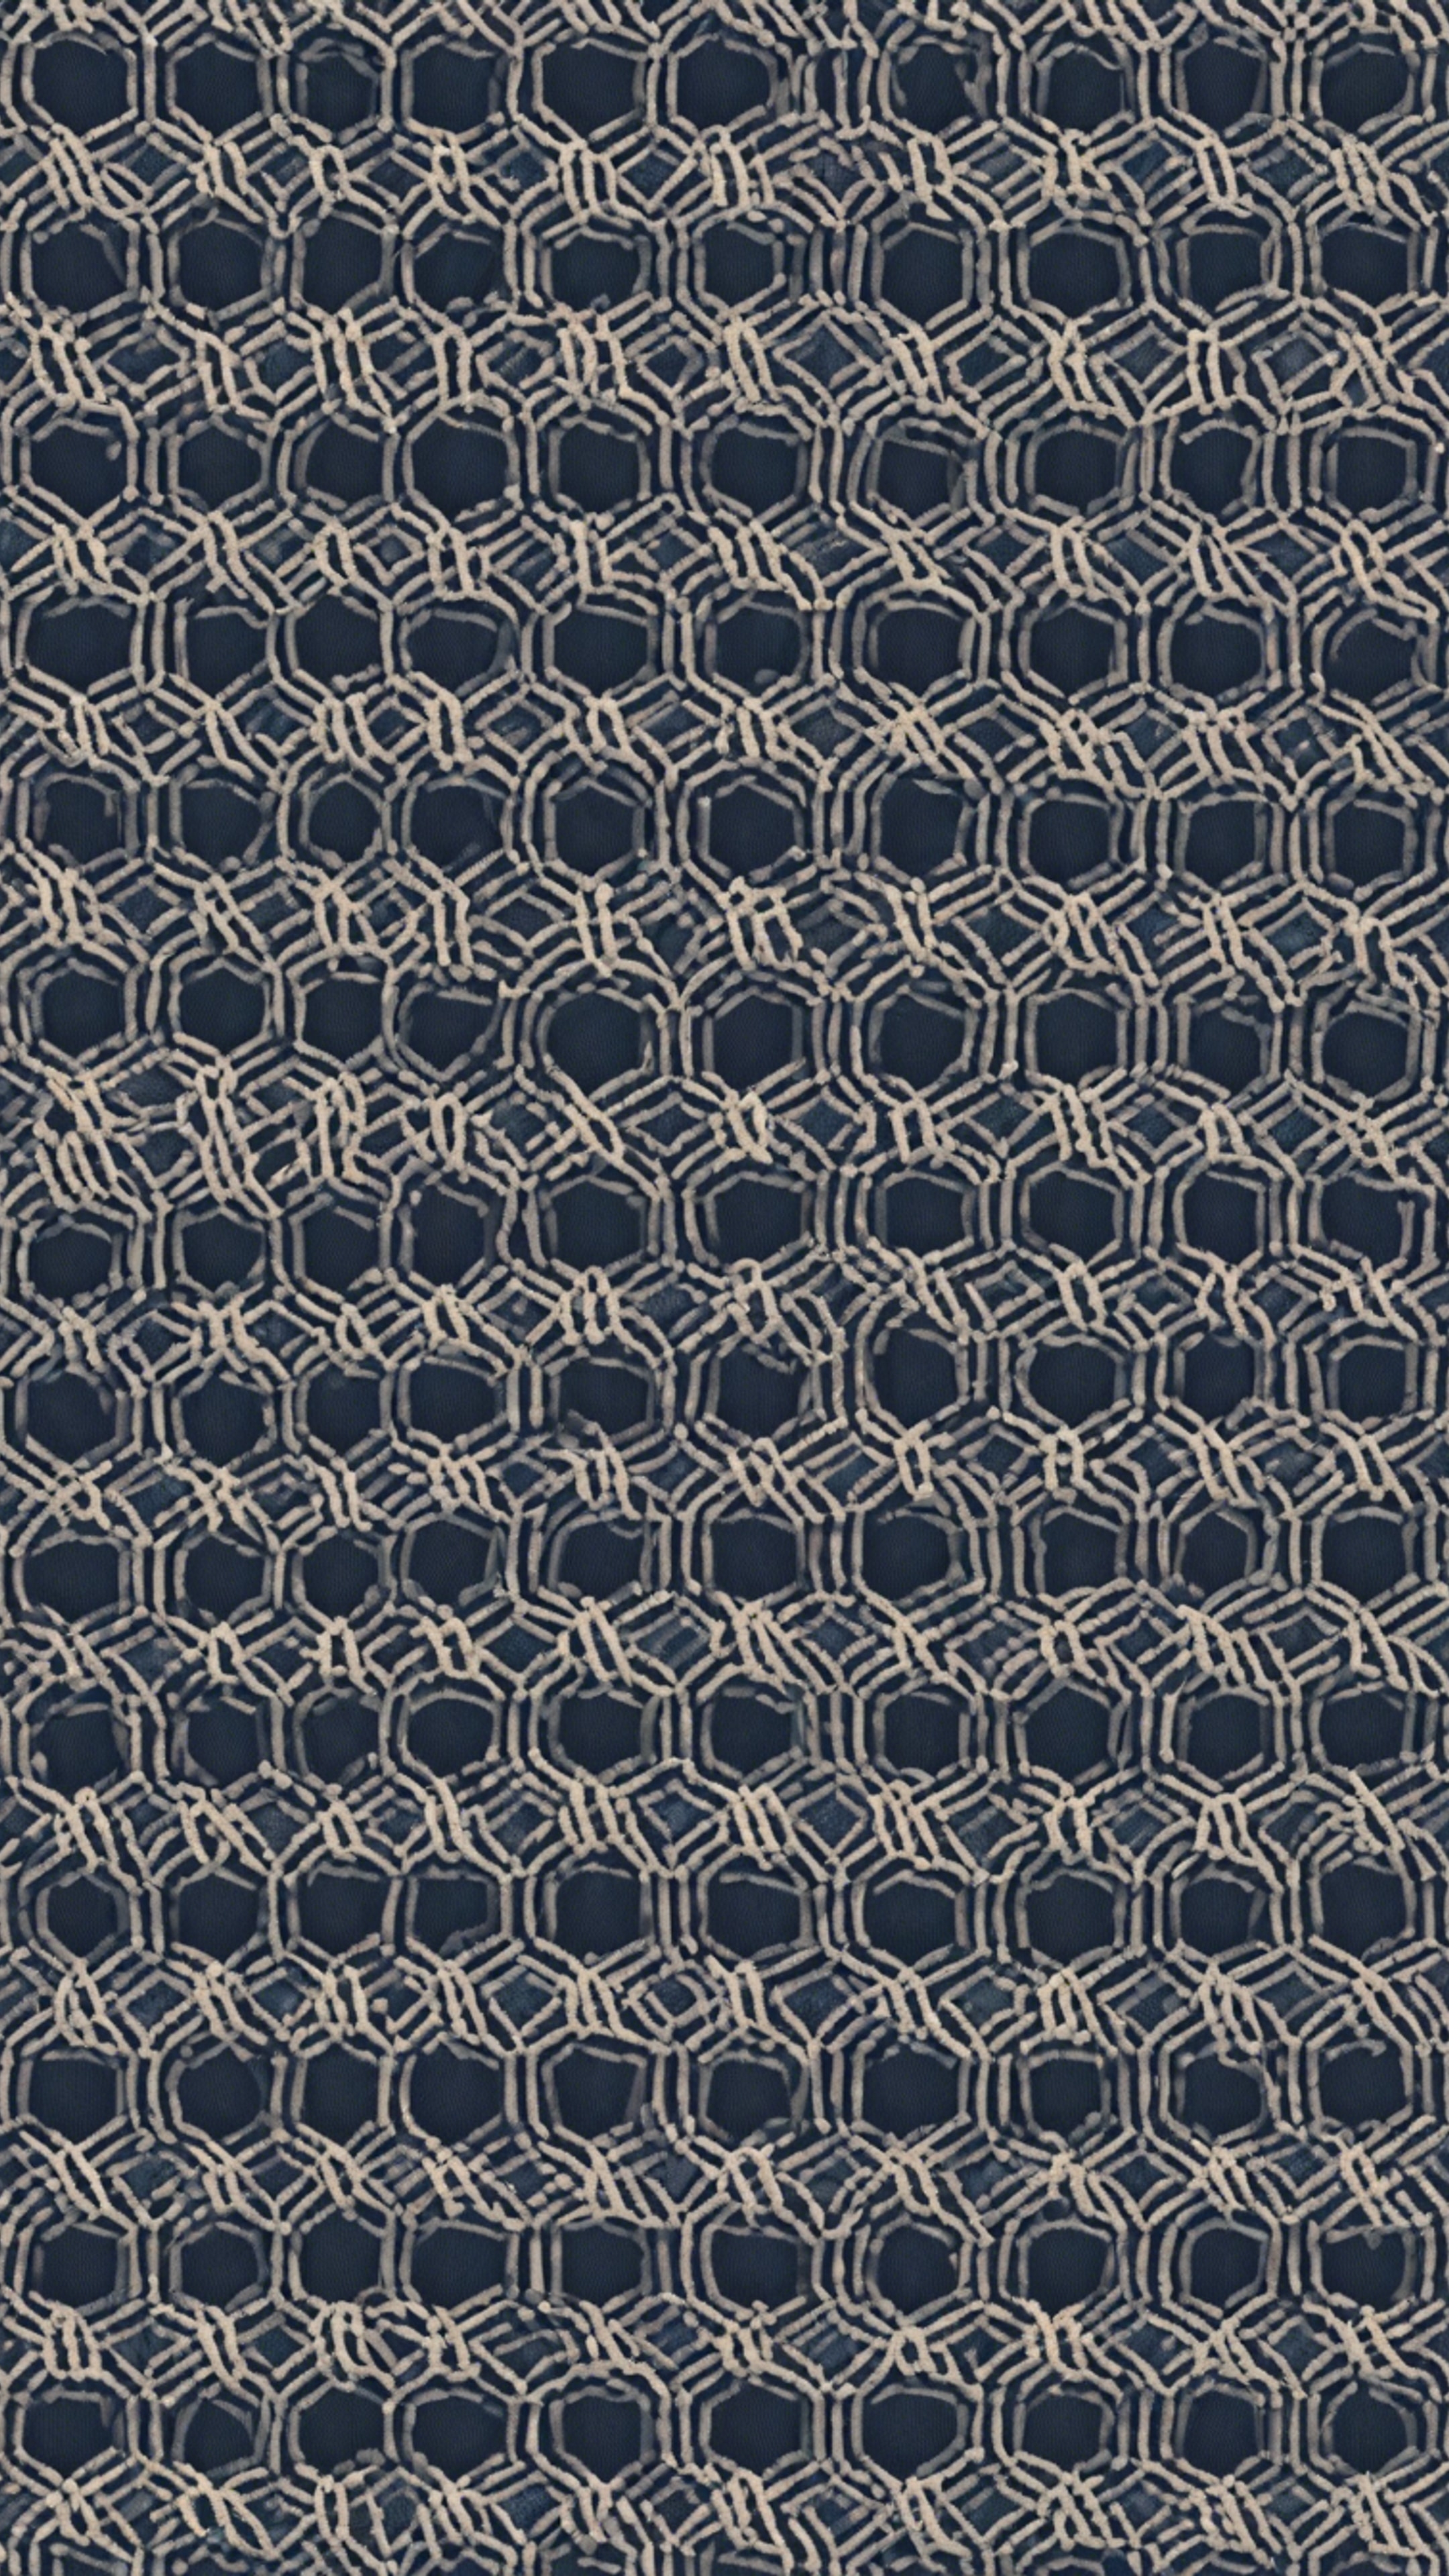 A geometric seamless pattern inspired by traditional Japanese sashiko stitching Behang[d49f05622a7b4579b9ed]